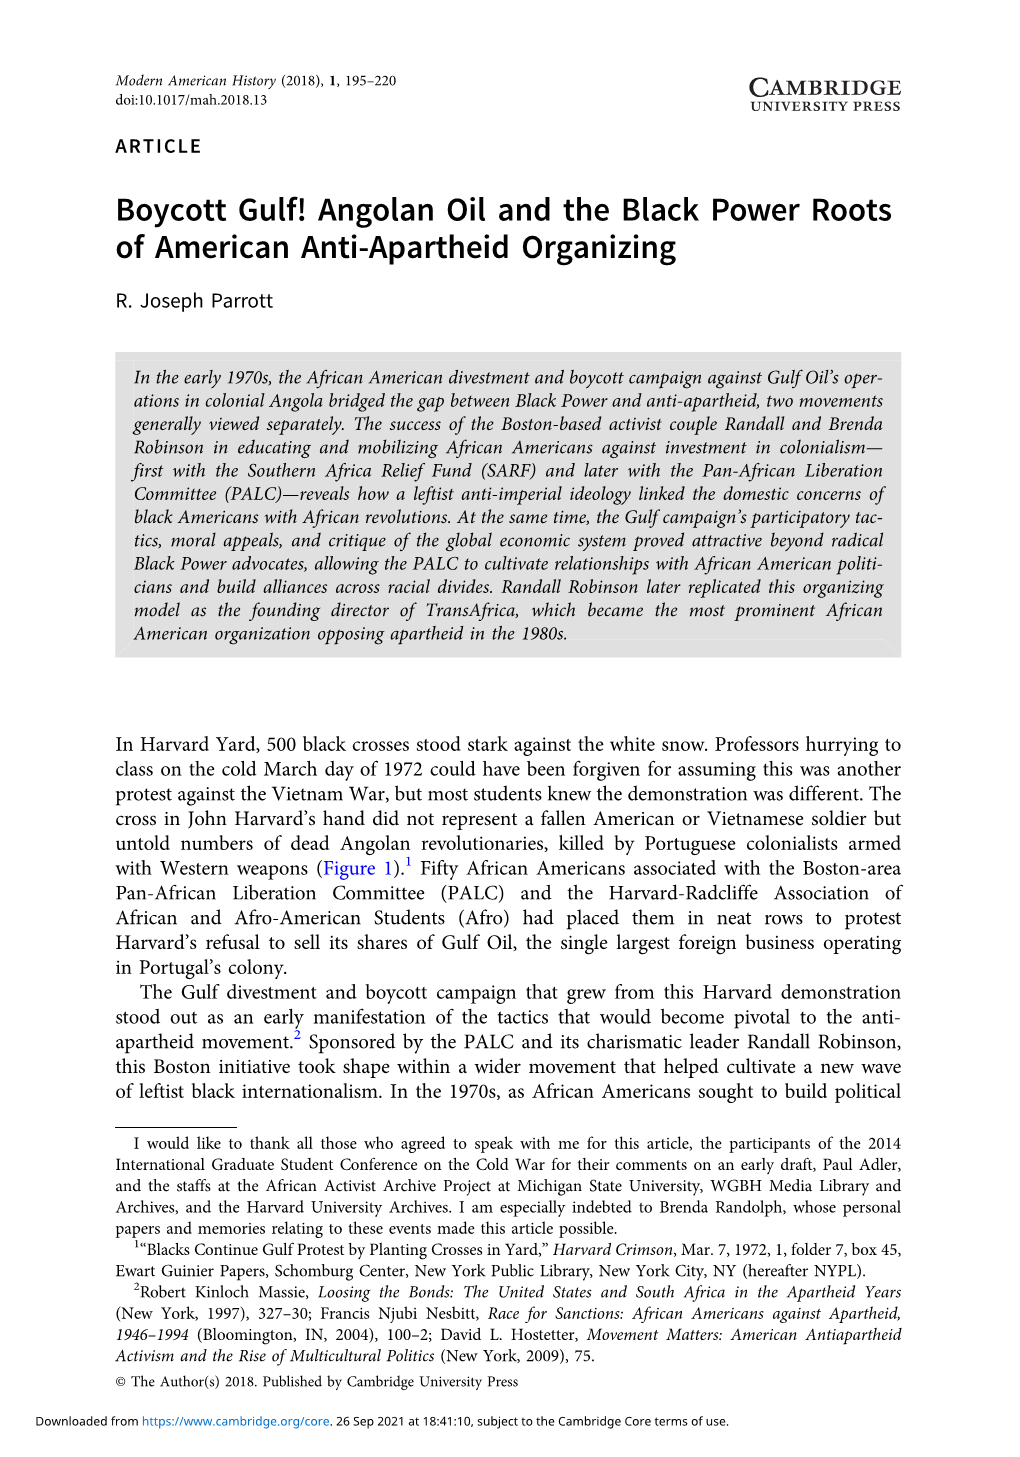 Boycott Gulf! Angolan Oil and the Black Power Roots of American Anti-Apartheid Organizing